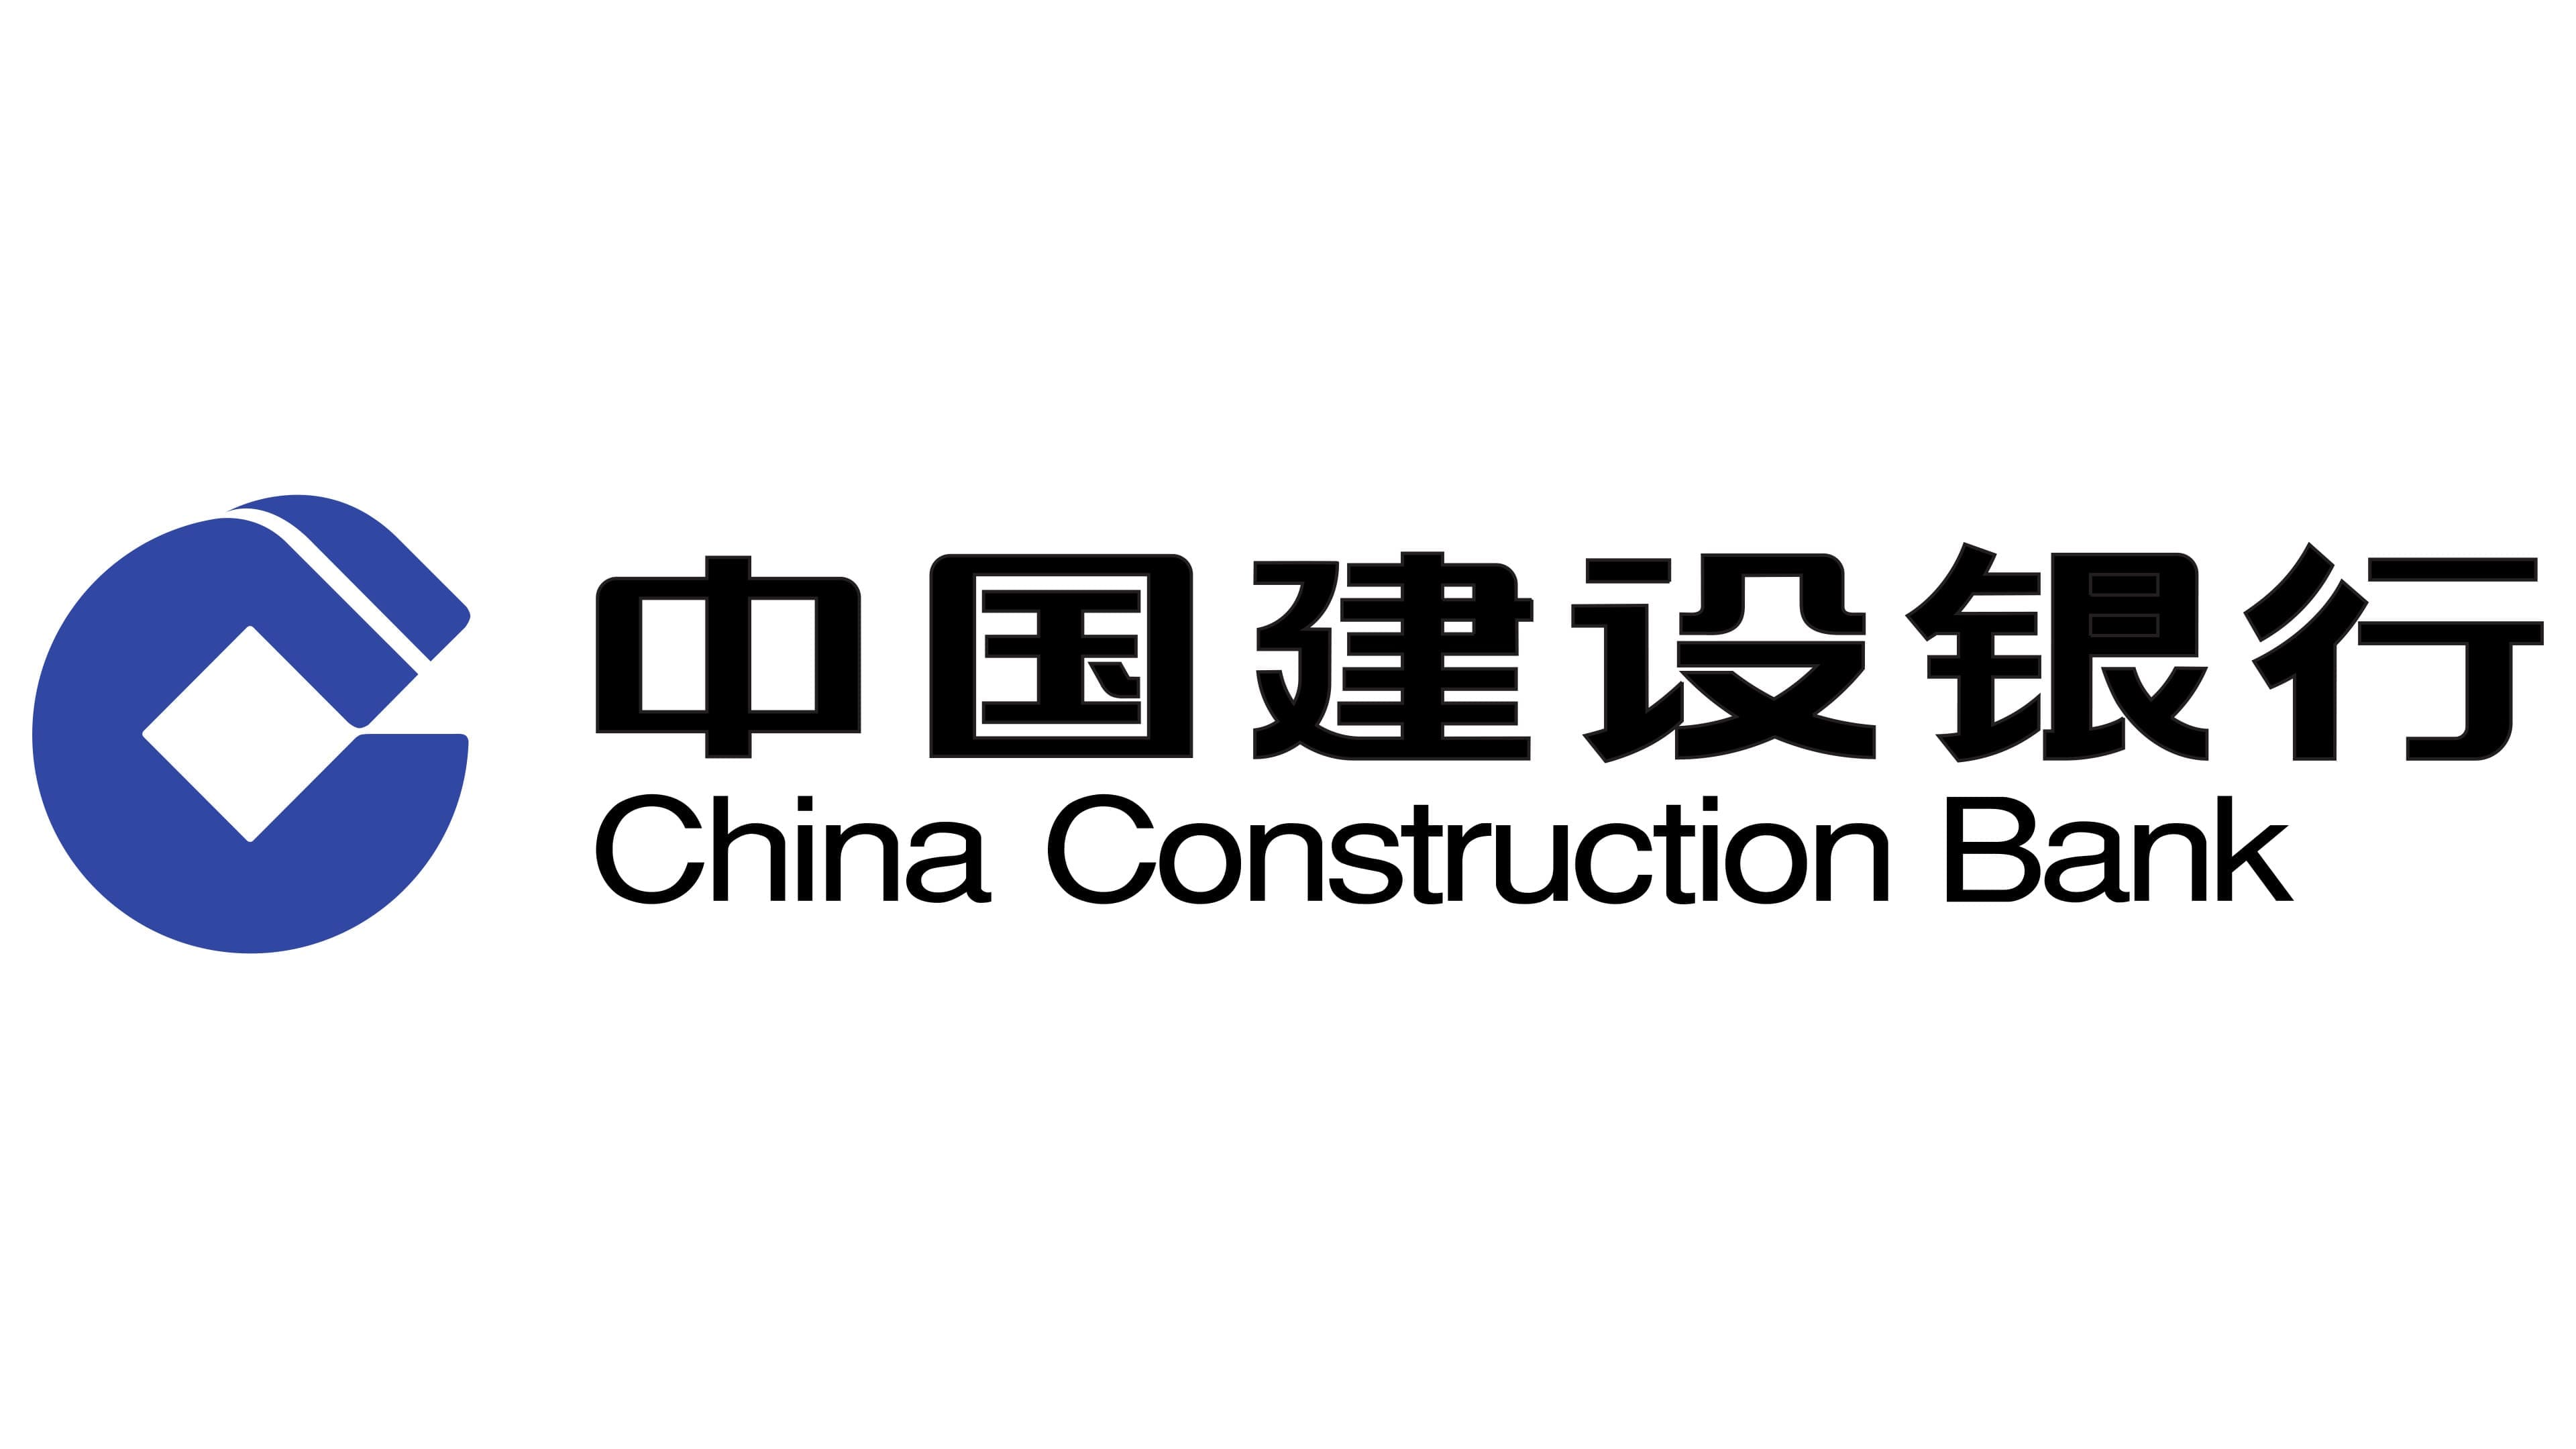 Construction bank of china. China Construction Bank Corporation. China Construction Bank logo. Строительного банка Китая. Строительный банк (CCB).